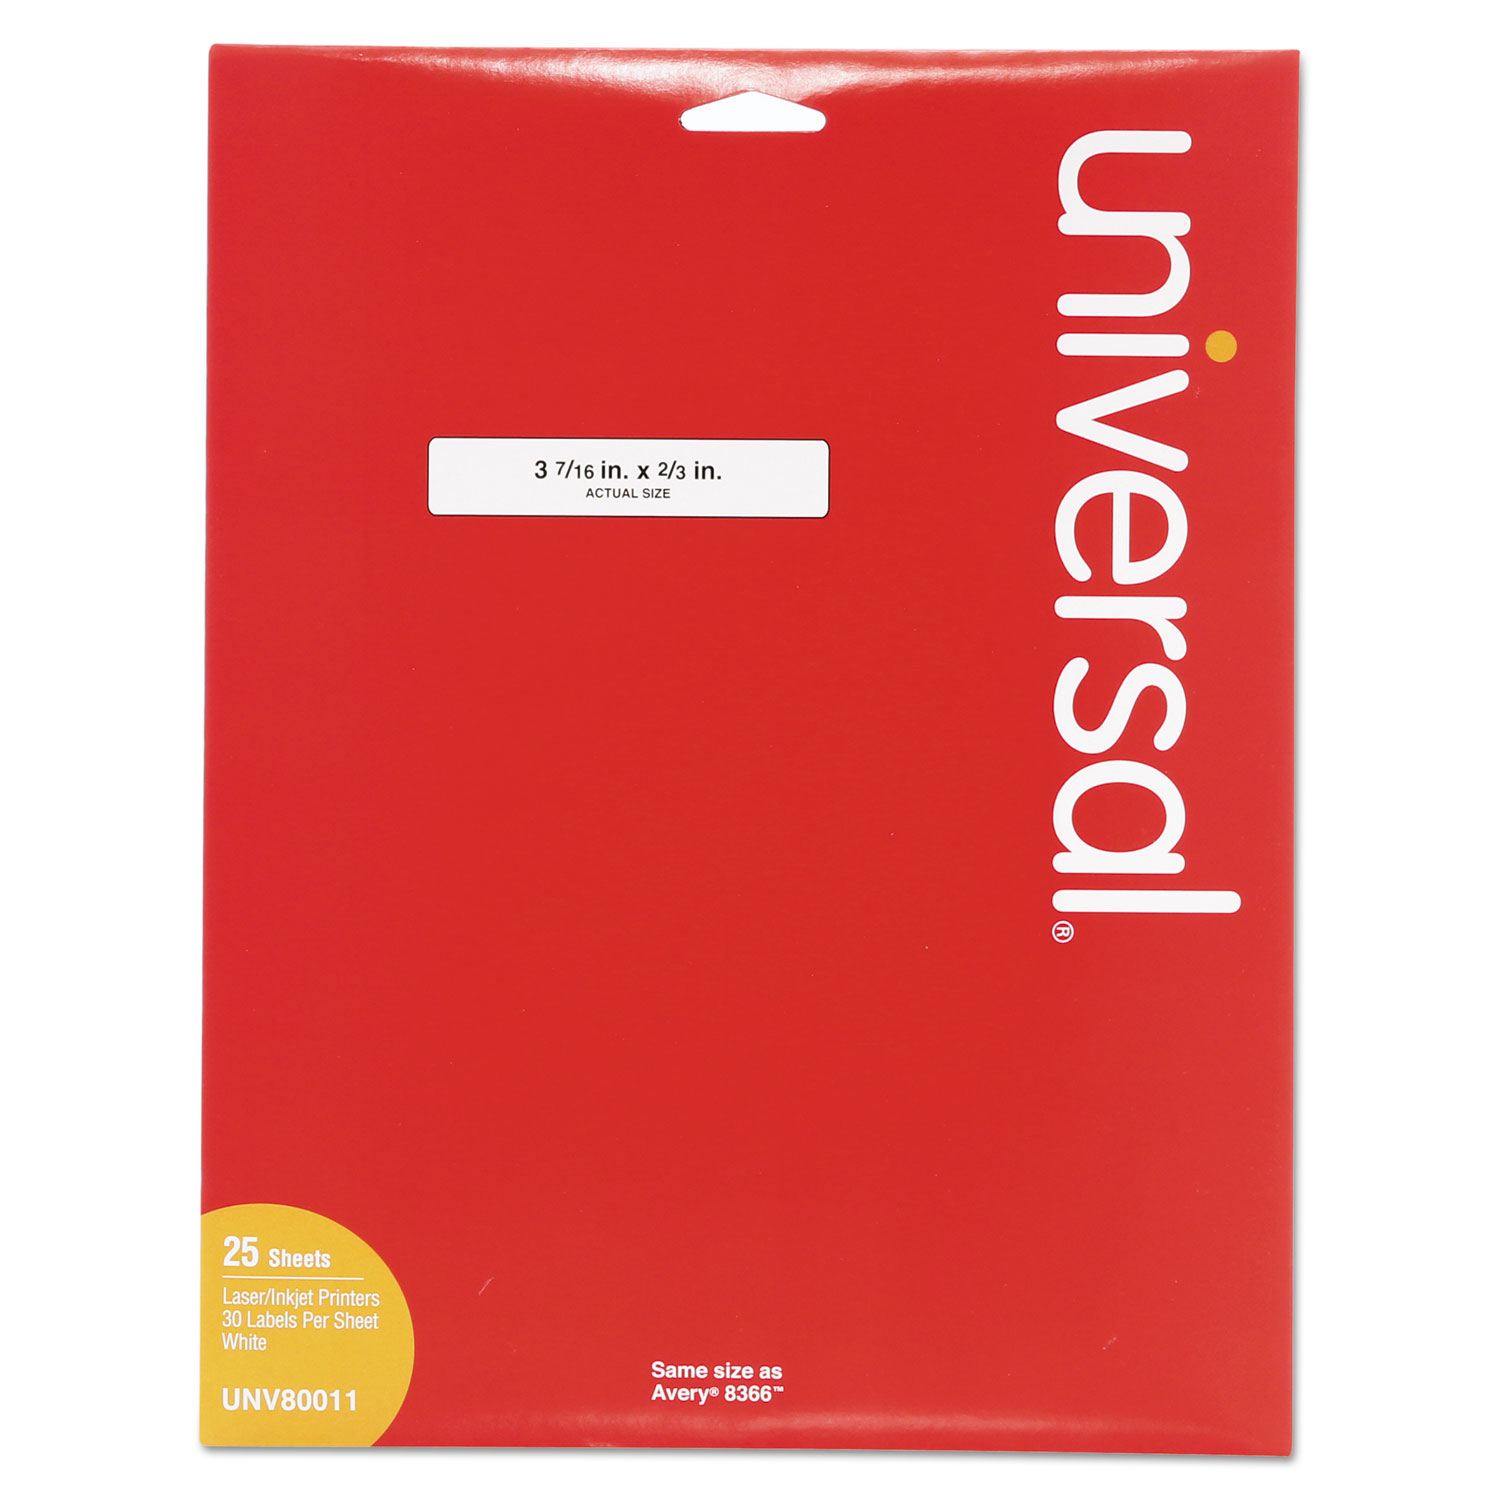  Universal UNV80011 Self-Adhesive Permanent File Folder Labels, 0.66 x 3.44, White, 30/Sheet, 25 Sheets/Box (UNV80011) 